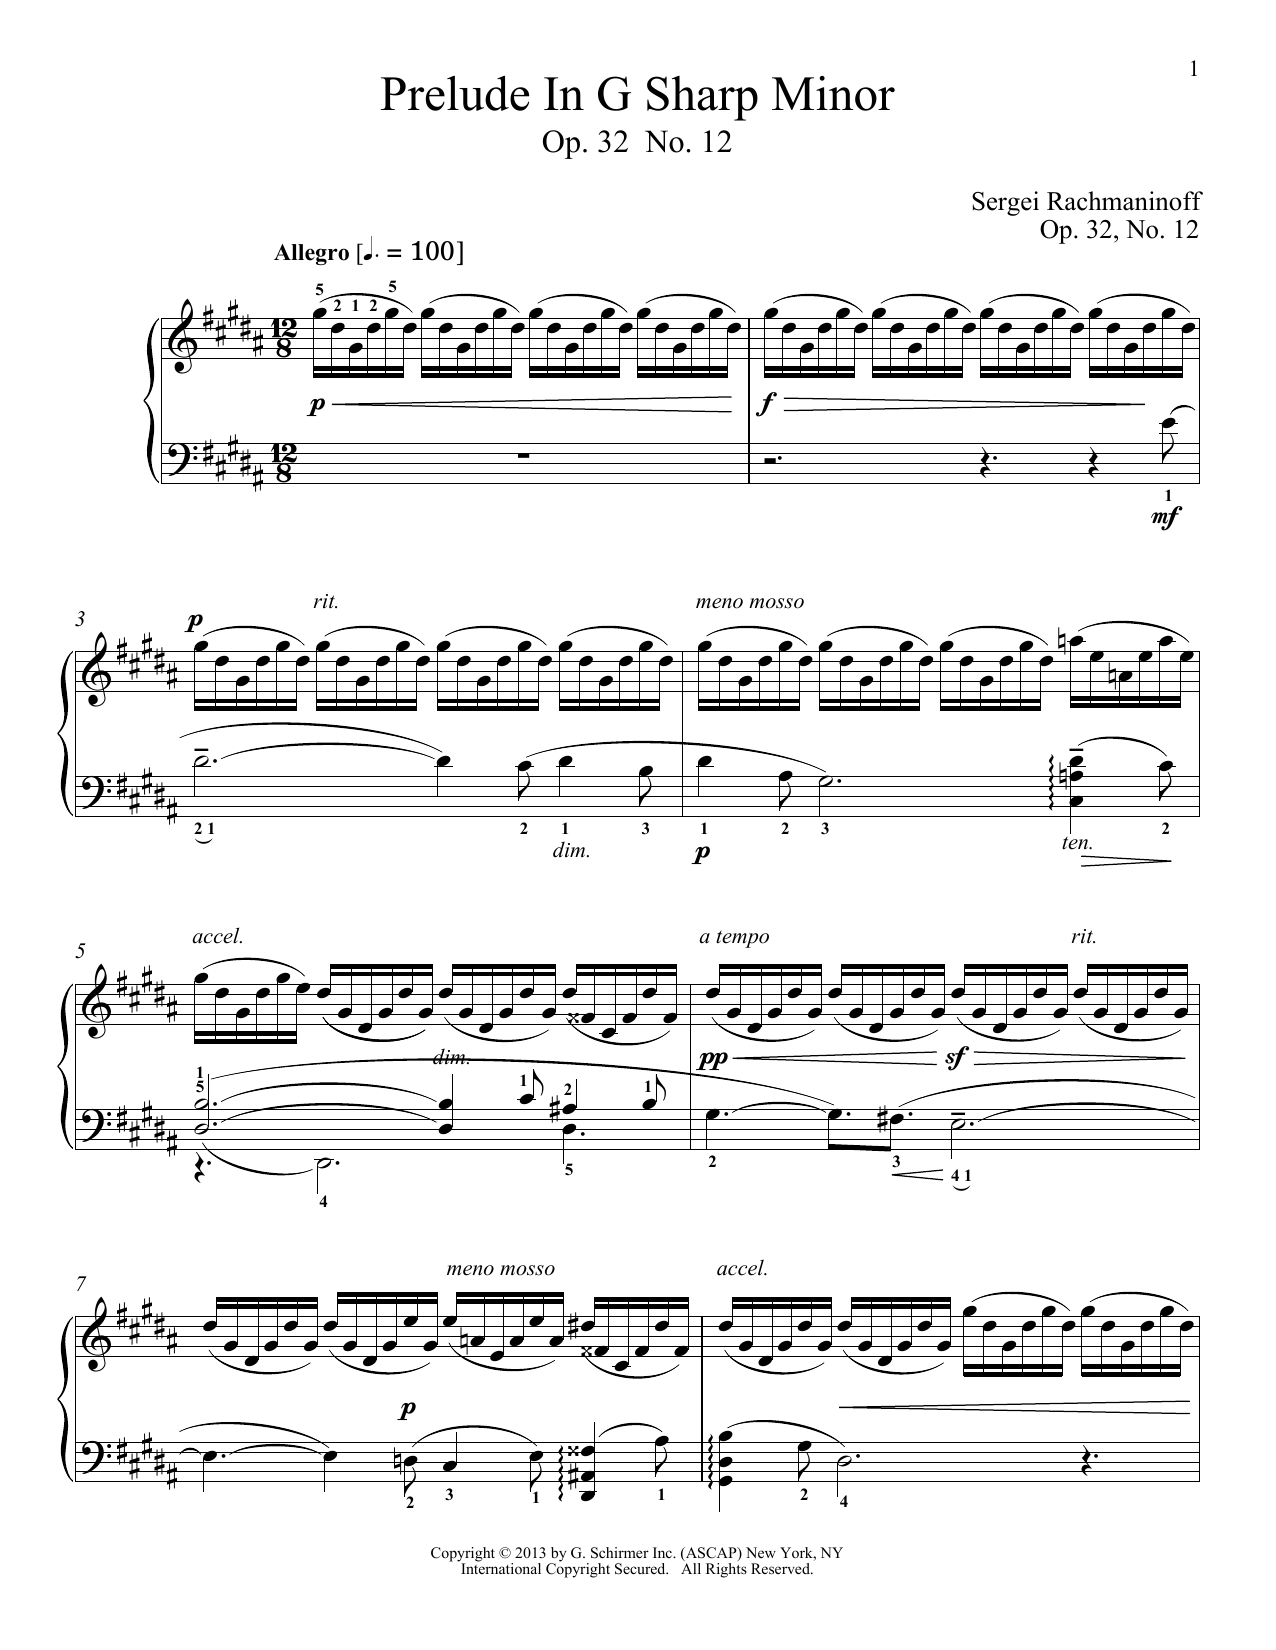 Sergei Rachmaninoff Prelude In G-Sharp Minor, Op. 32, No. 12 sheet music notes printable PDF score